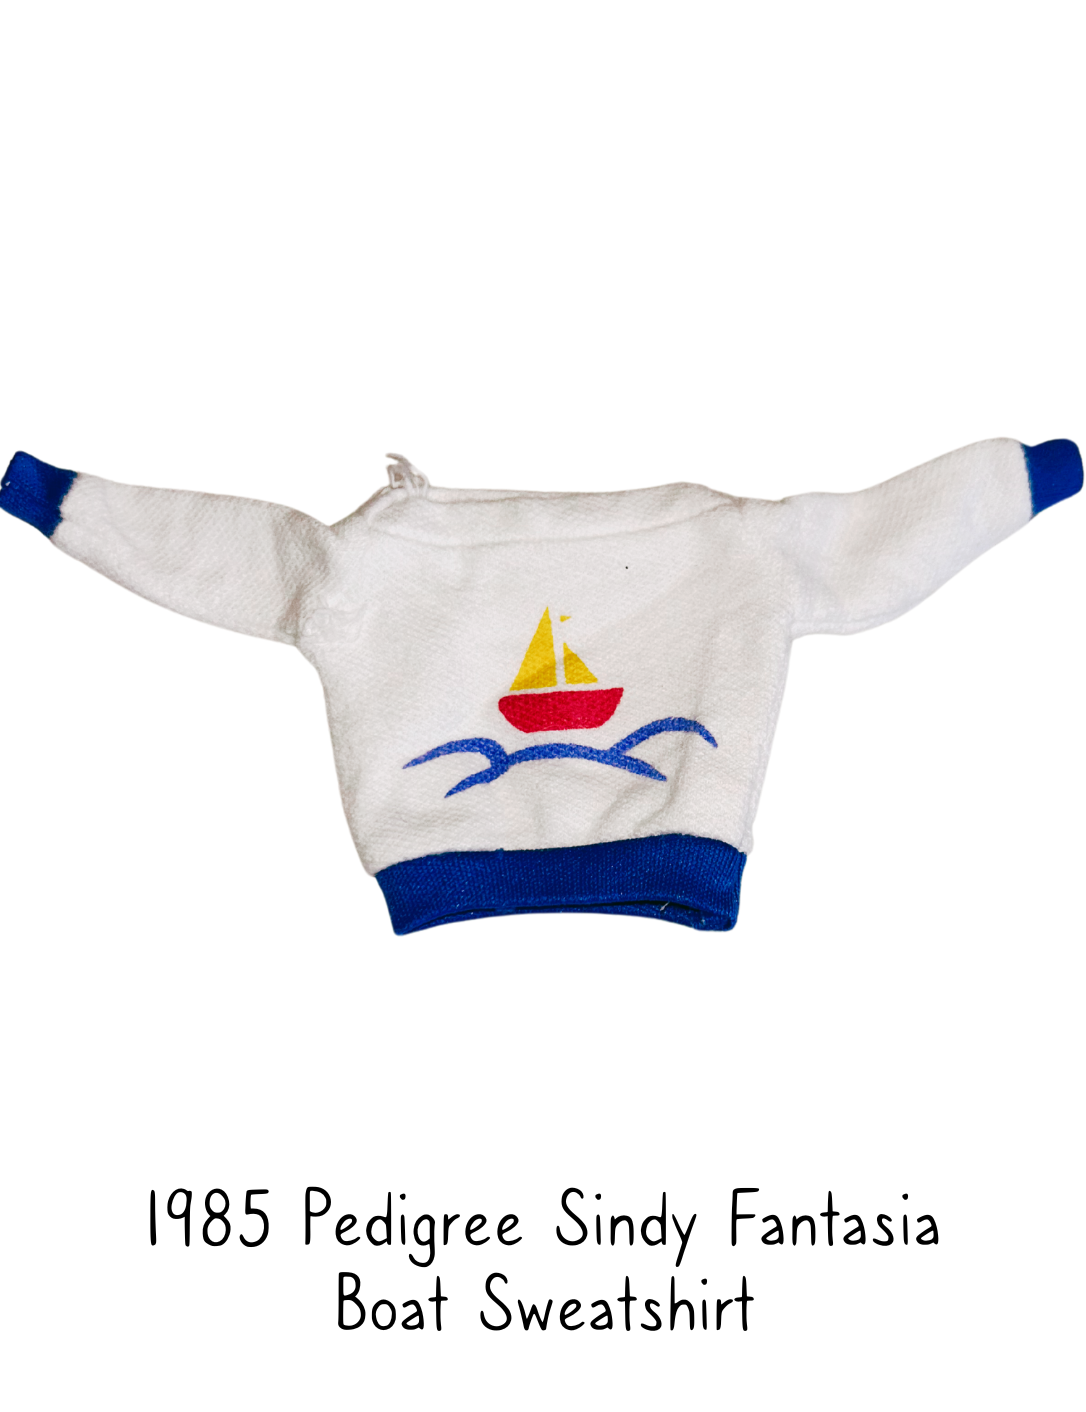 1985 Pedigree Sindy Fashion Doll Fantasia Boat Sweatshirt